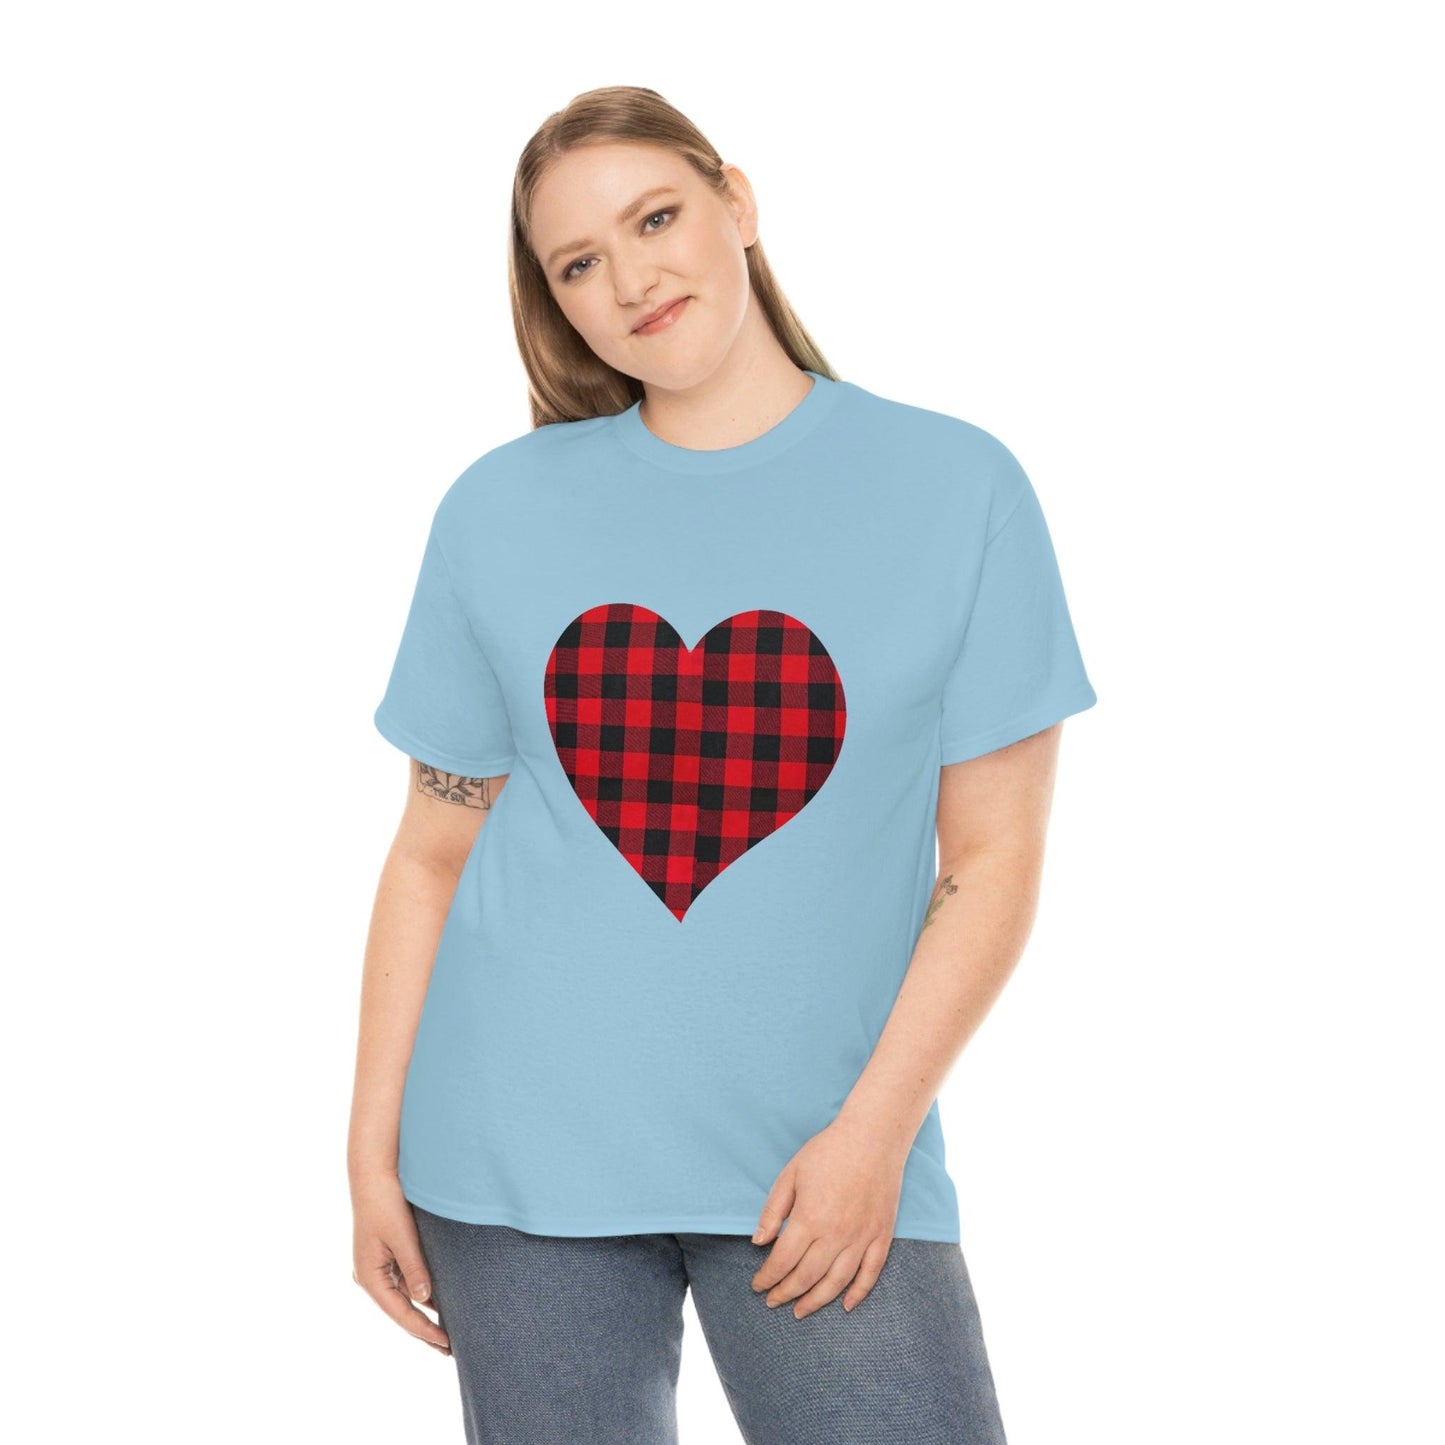 Plaid Heart T-Shirt, Valentines day Shirt,